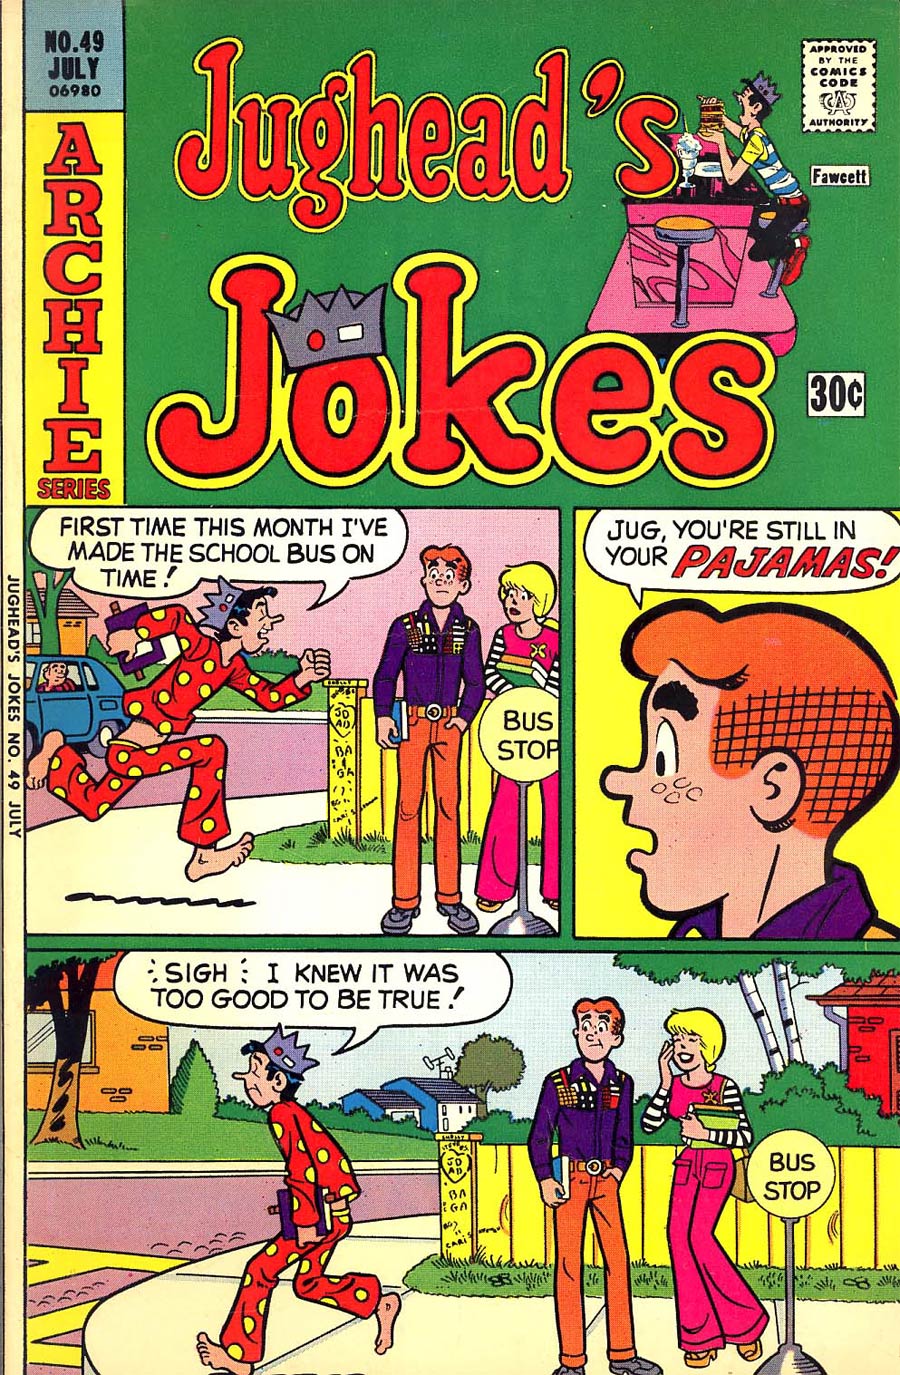 Jugheads Jokes #49